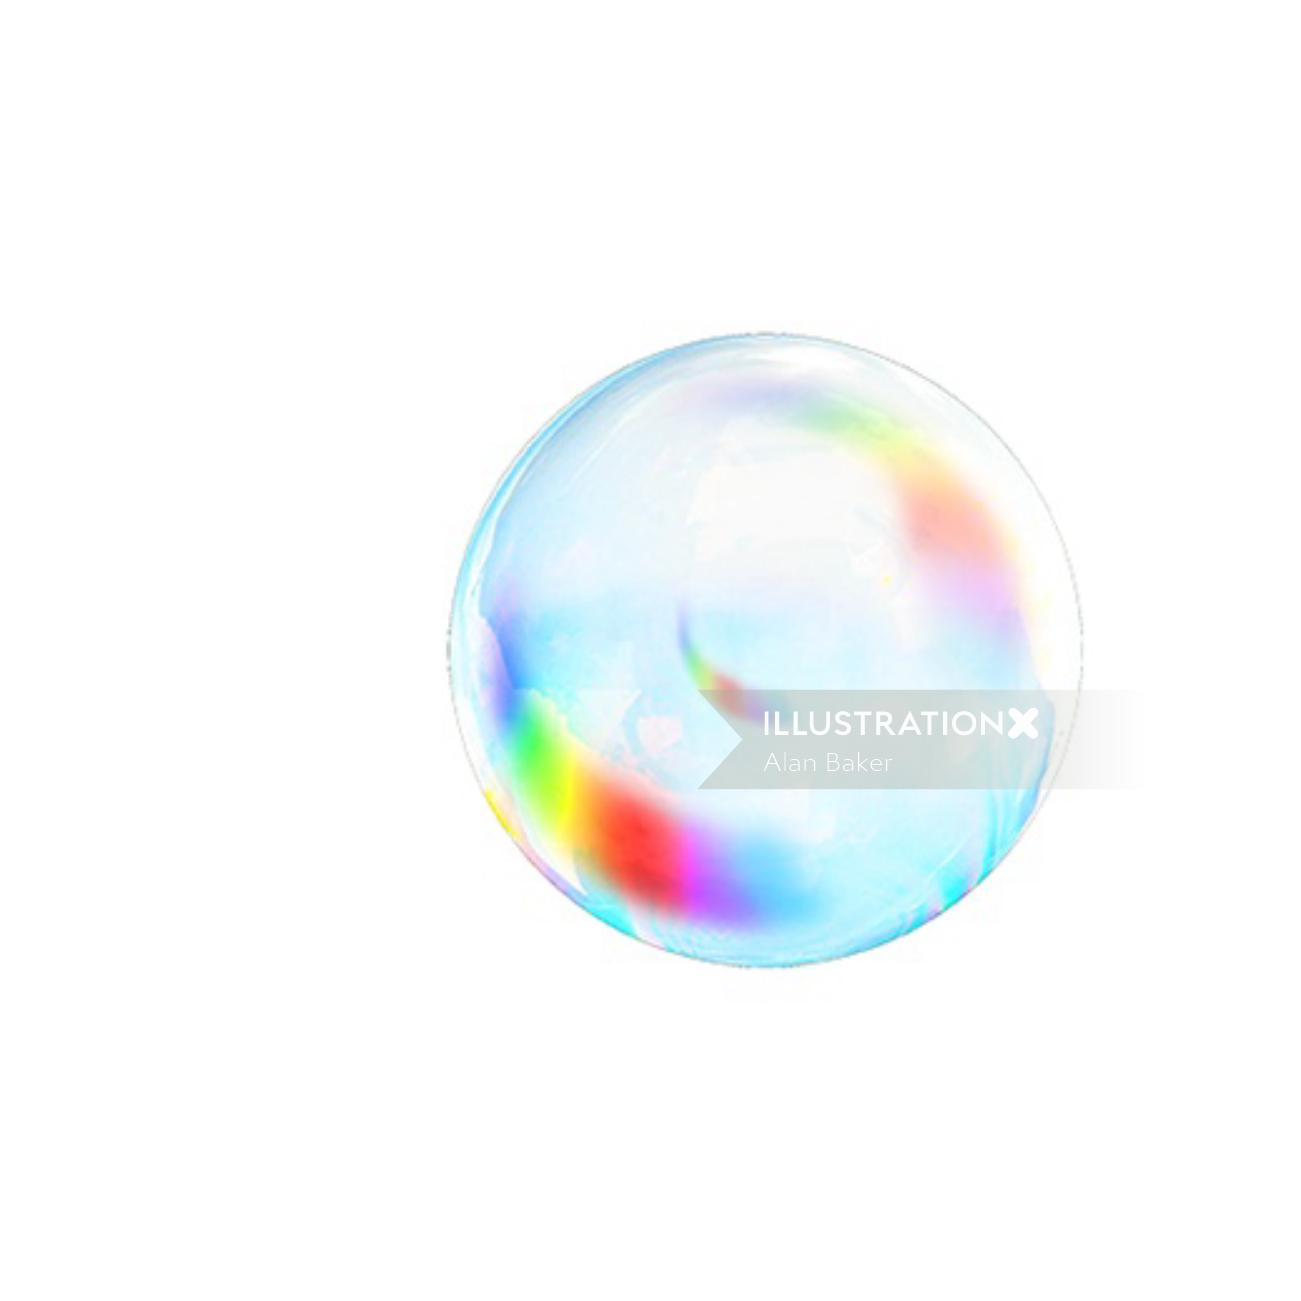 Animation of floating bubble